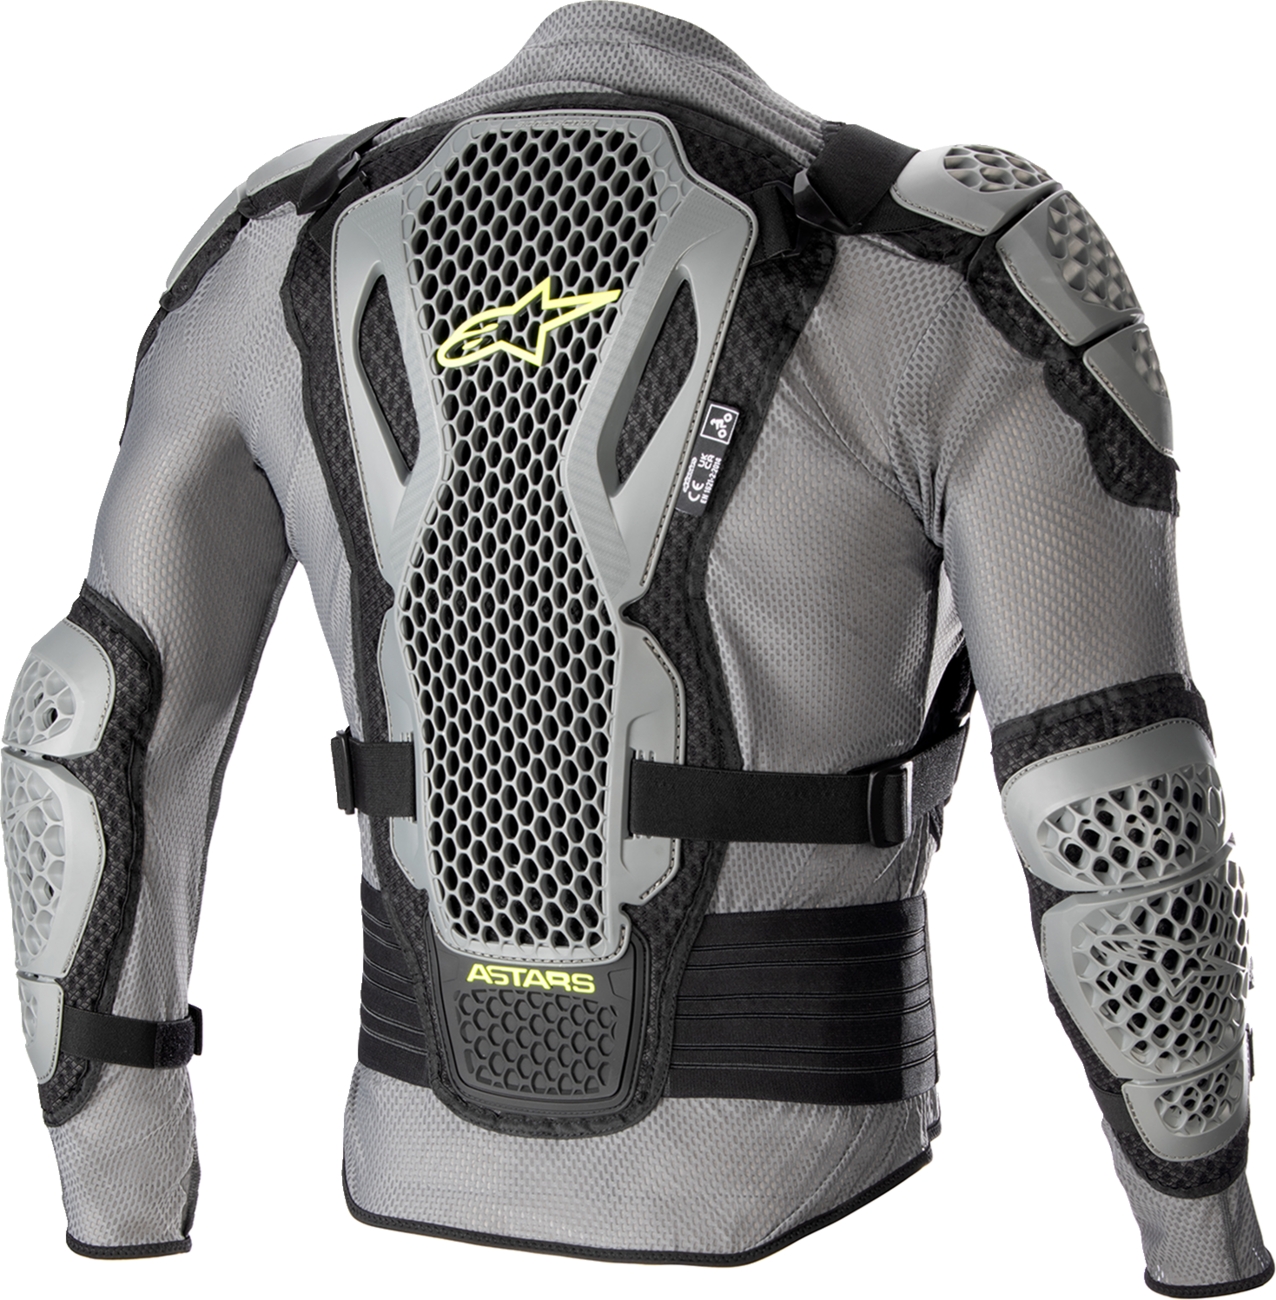 ALPINESTARS Bionic Action V2 Protection Jacket - Gray/Black/Yellow - Large 6506823-915-L